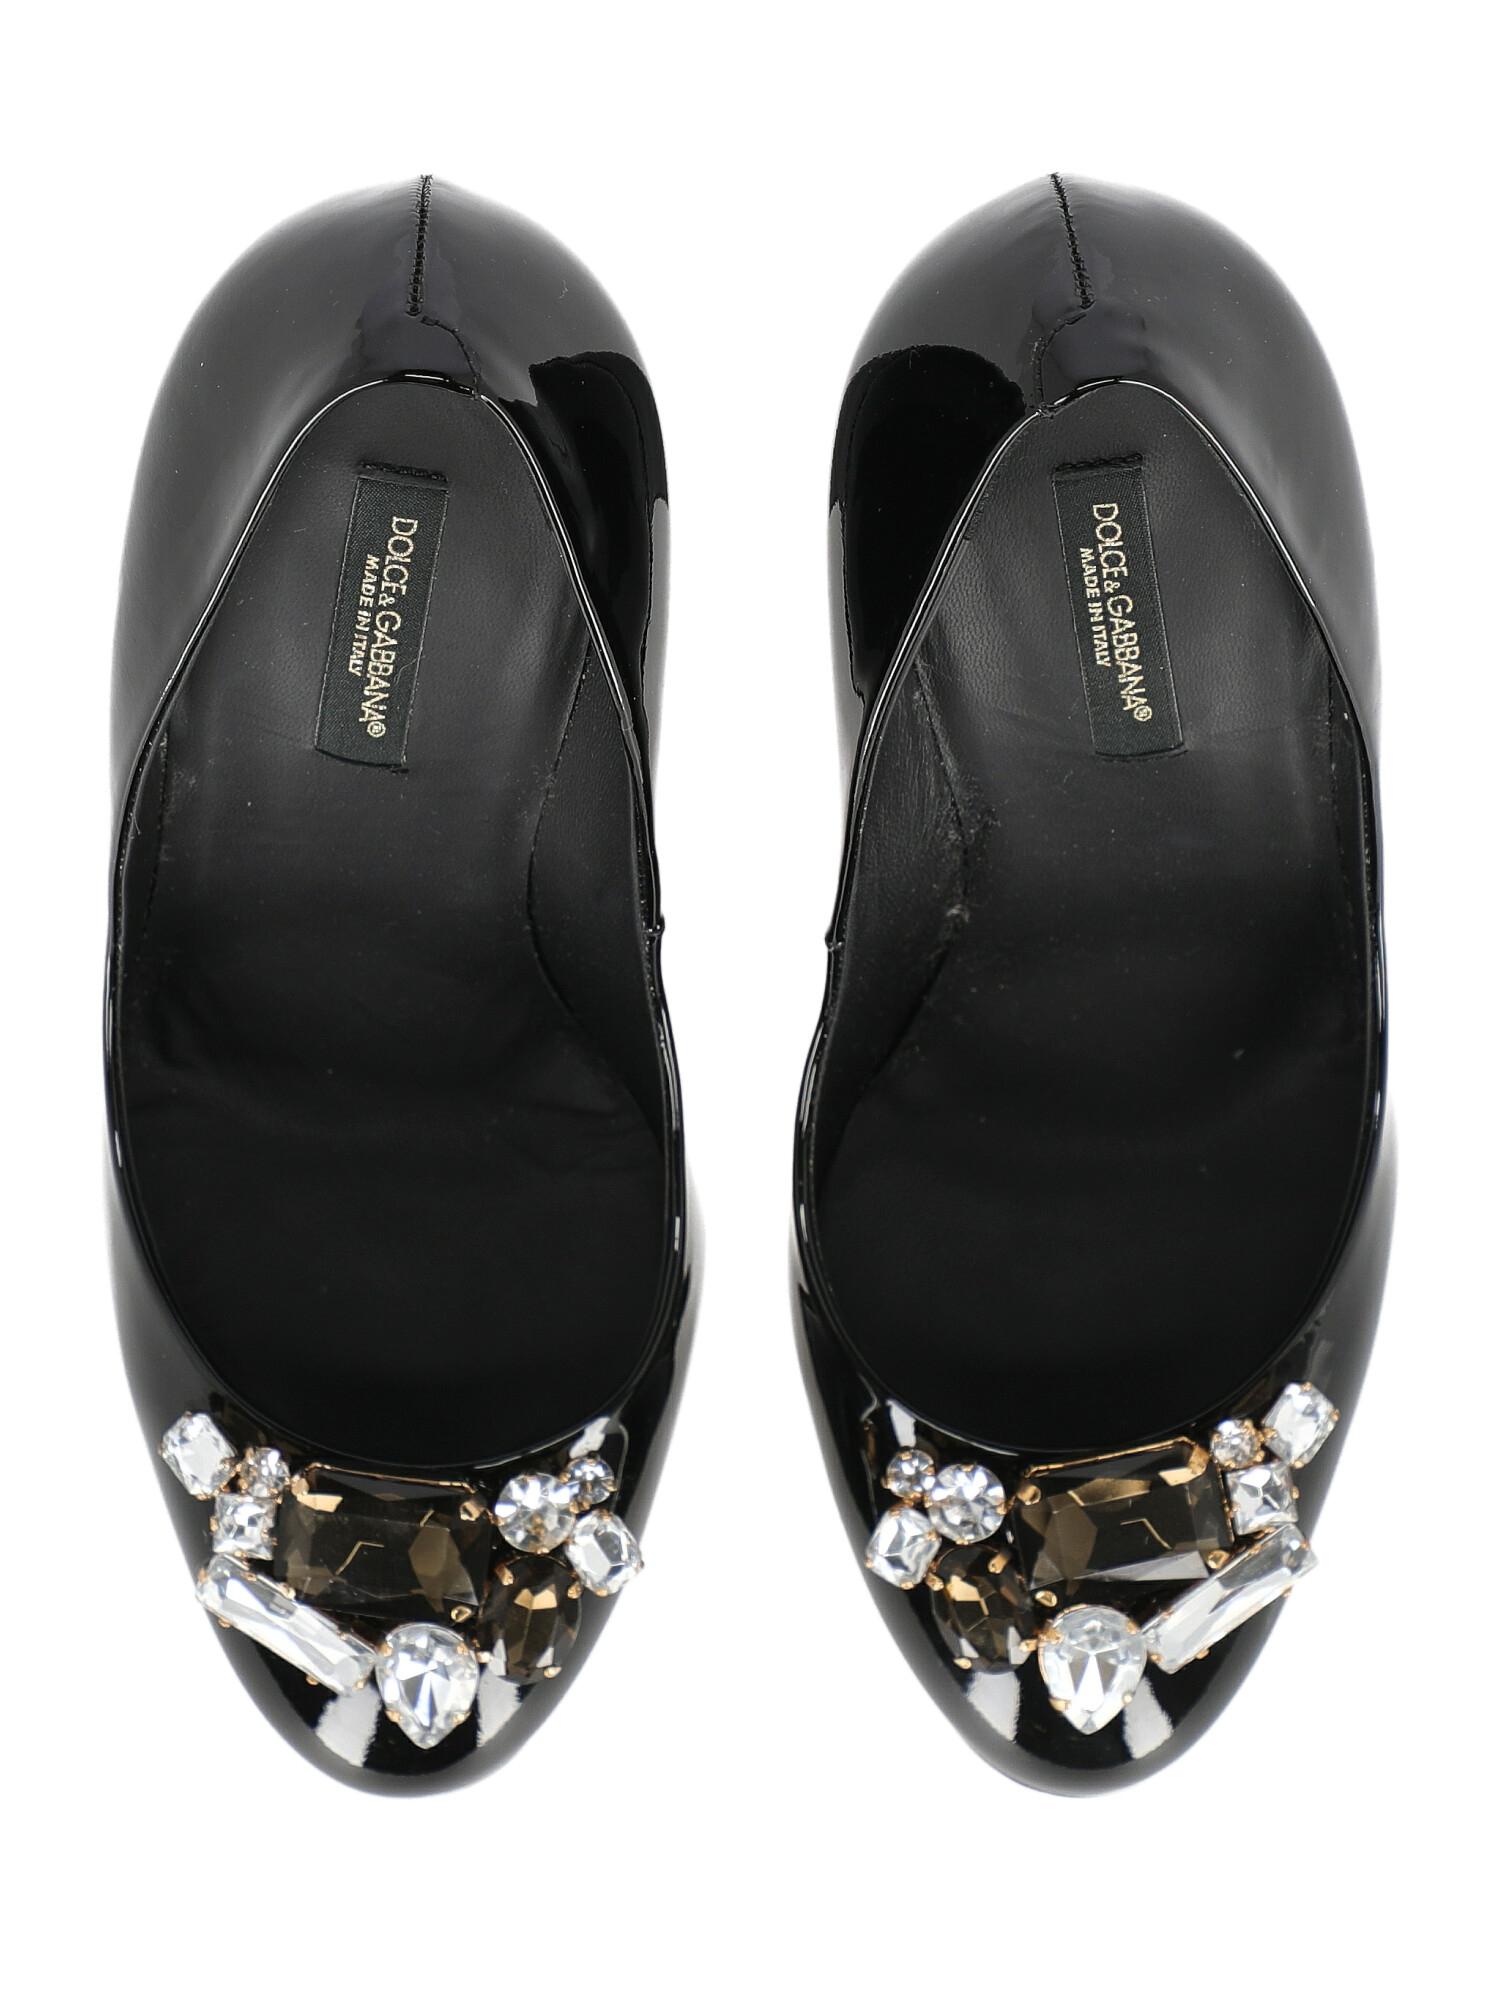 Dolce & Gabbana Woman Pumps Black Leather IT 36.5 For Sale 2